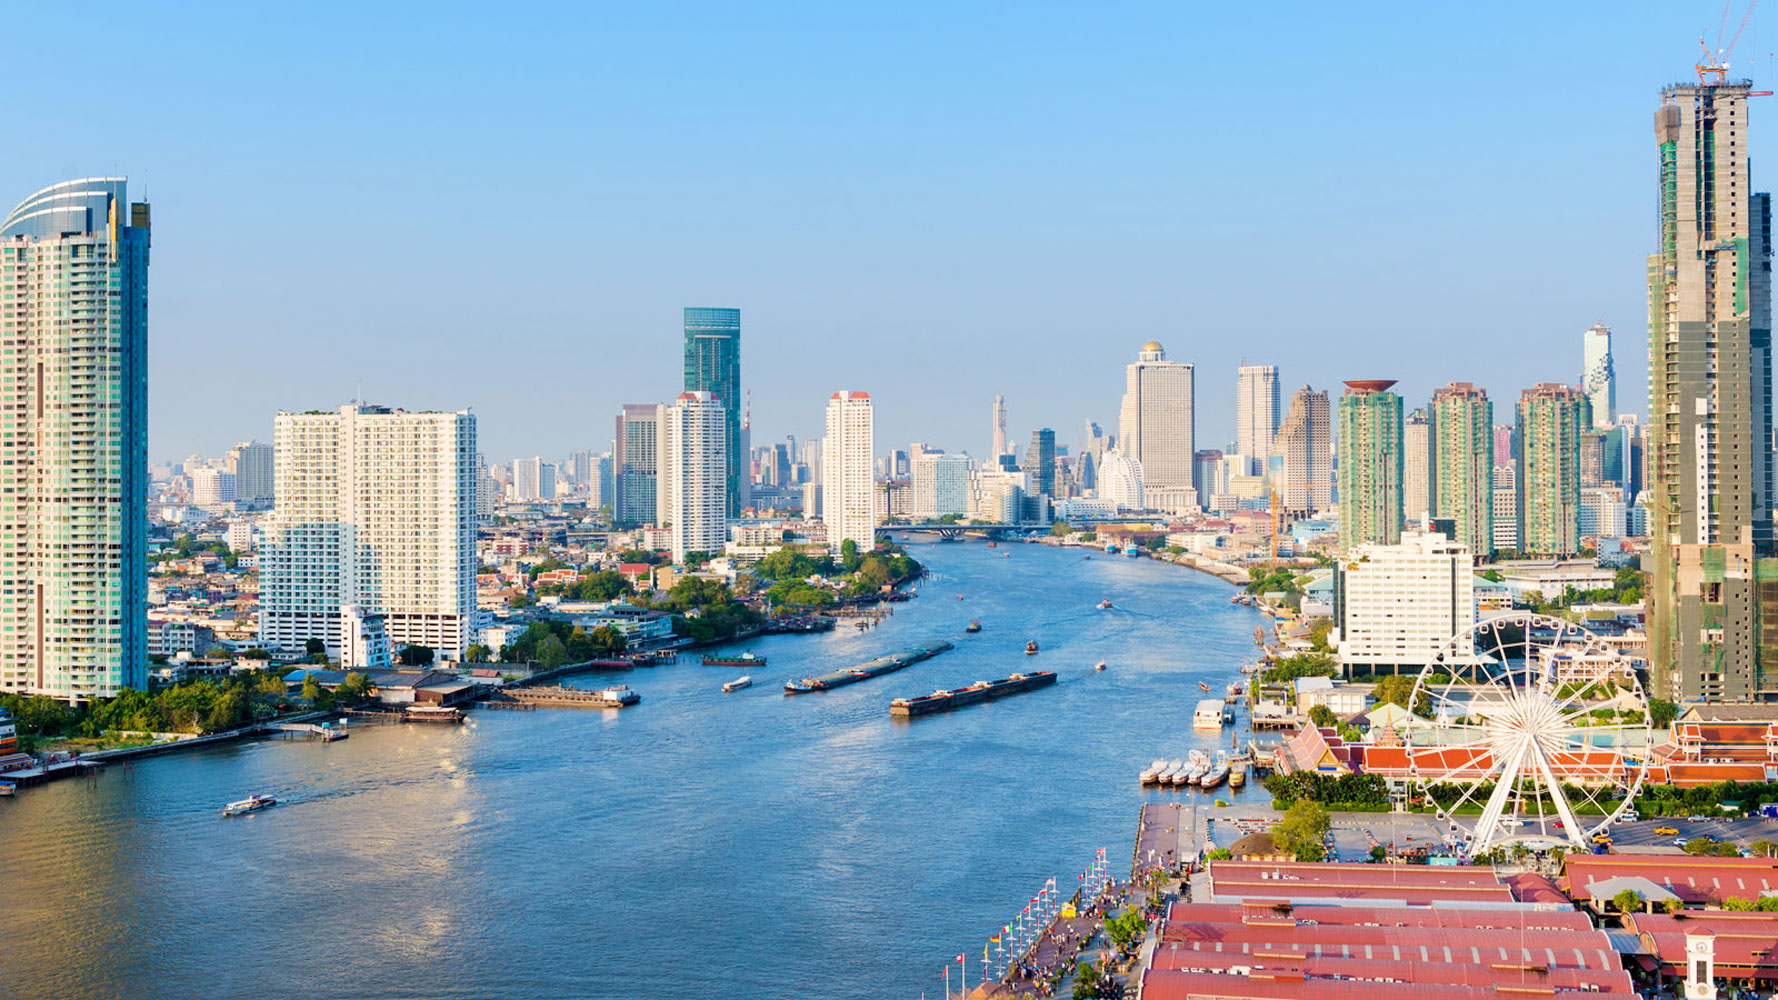 Chao Phraya River filming location in Bangkok Thailand